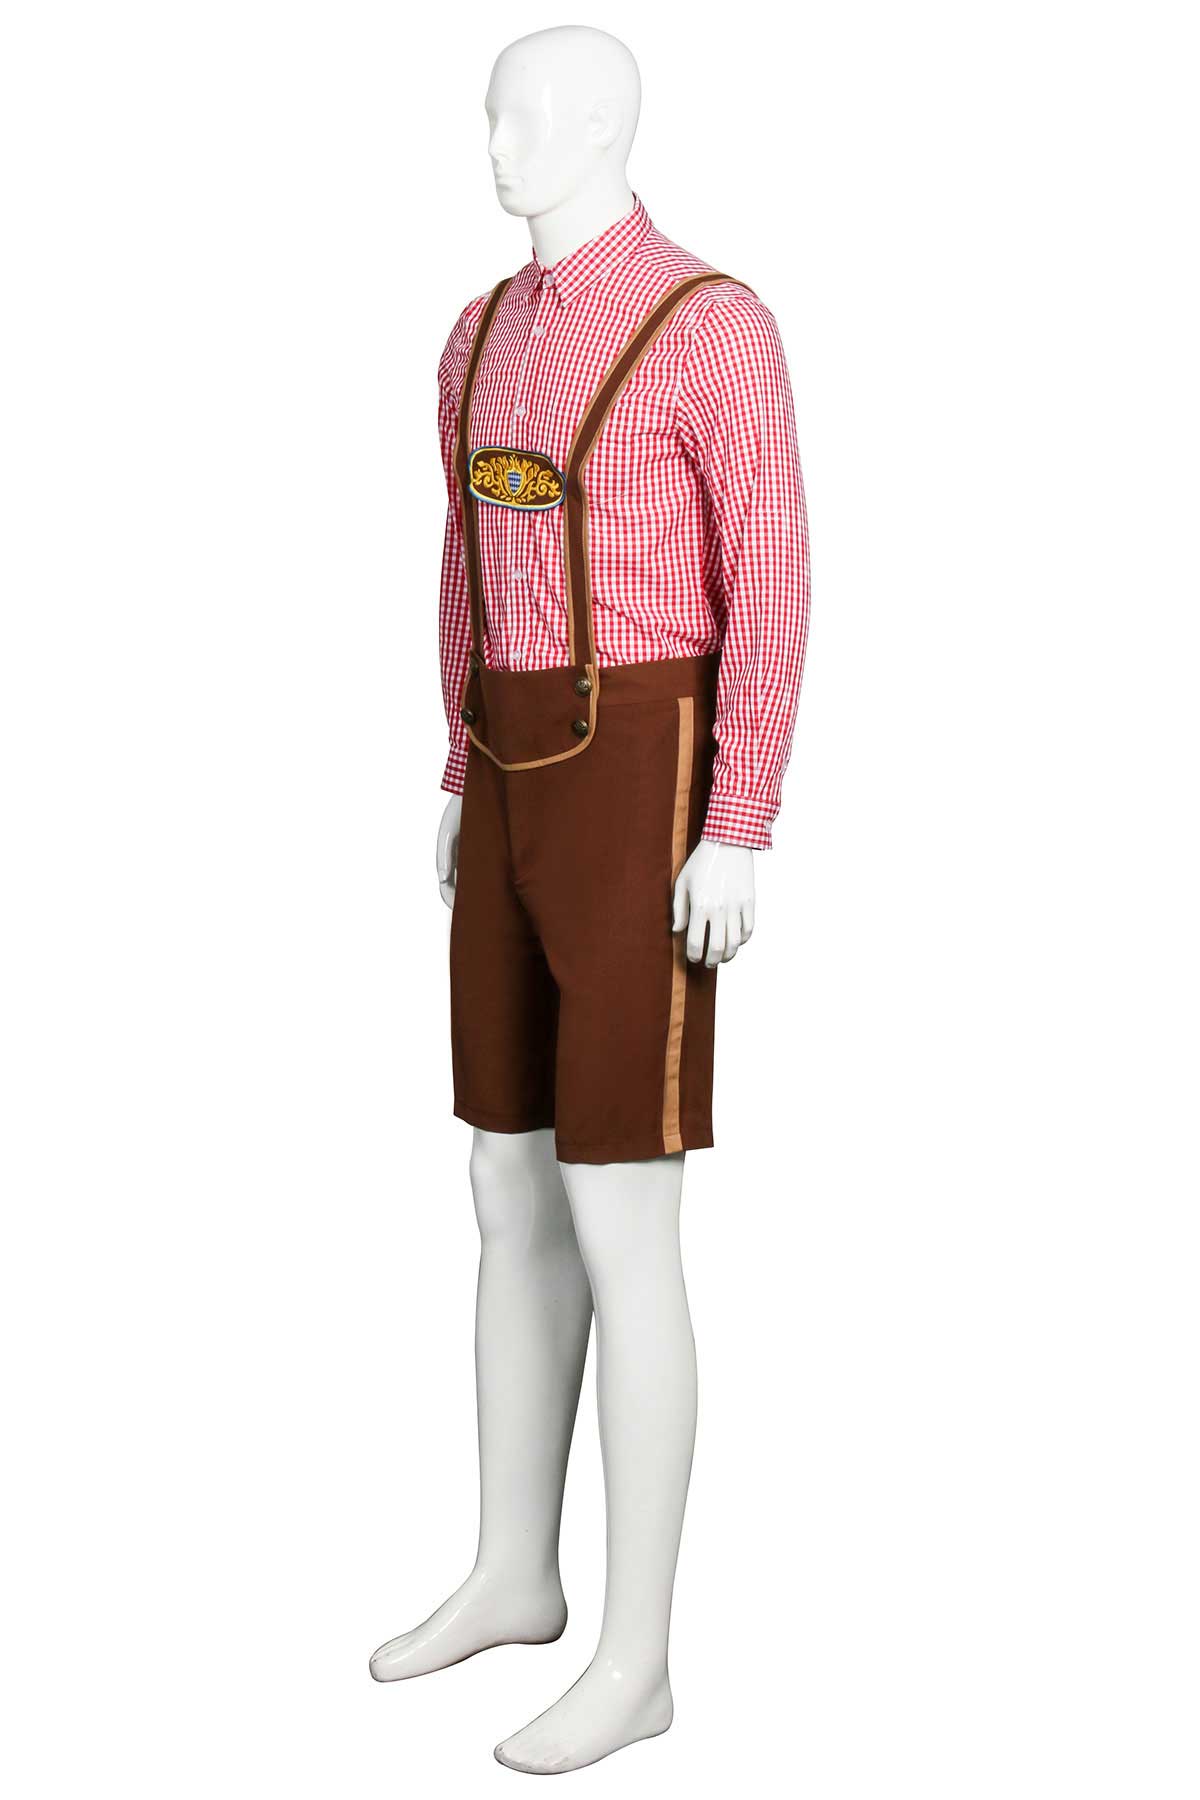 Bavarian Beer Lederhosen Oktoberfest Mens Costume Shirt Pants Suspenders-Takerlama